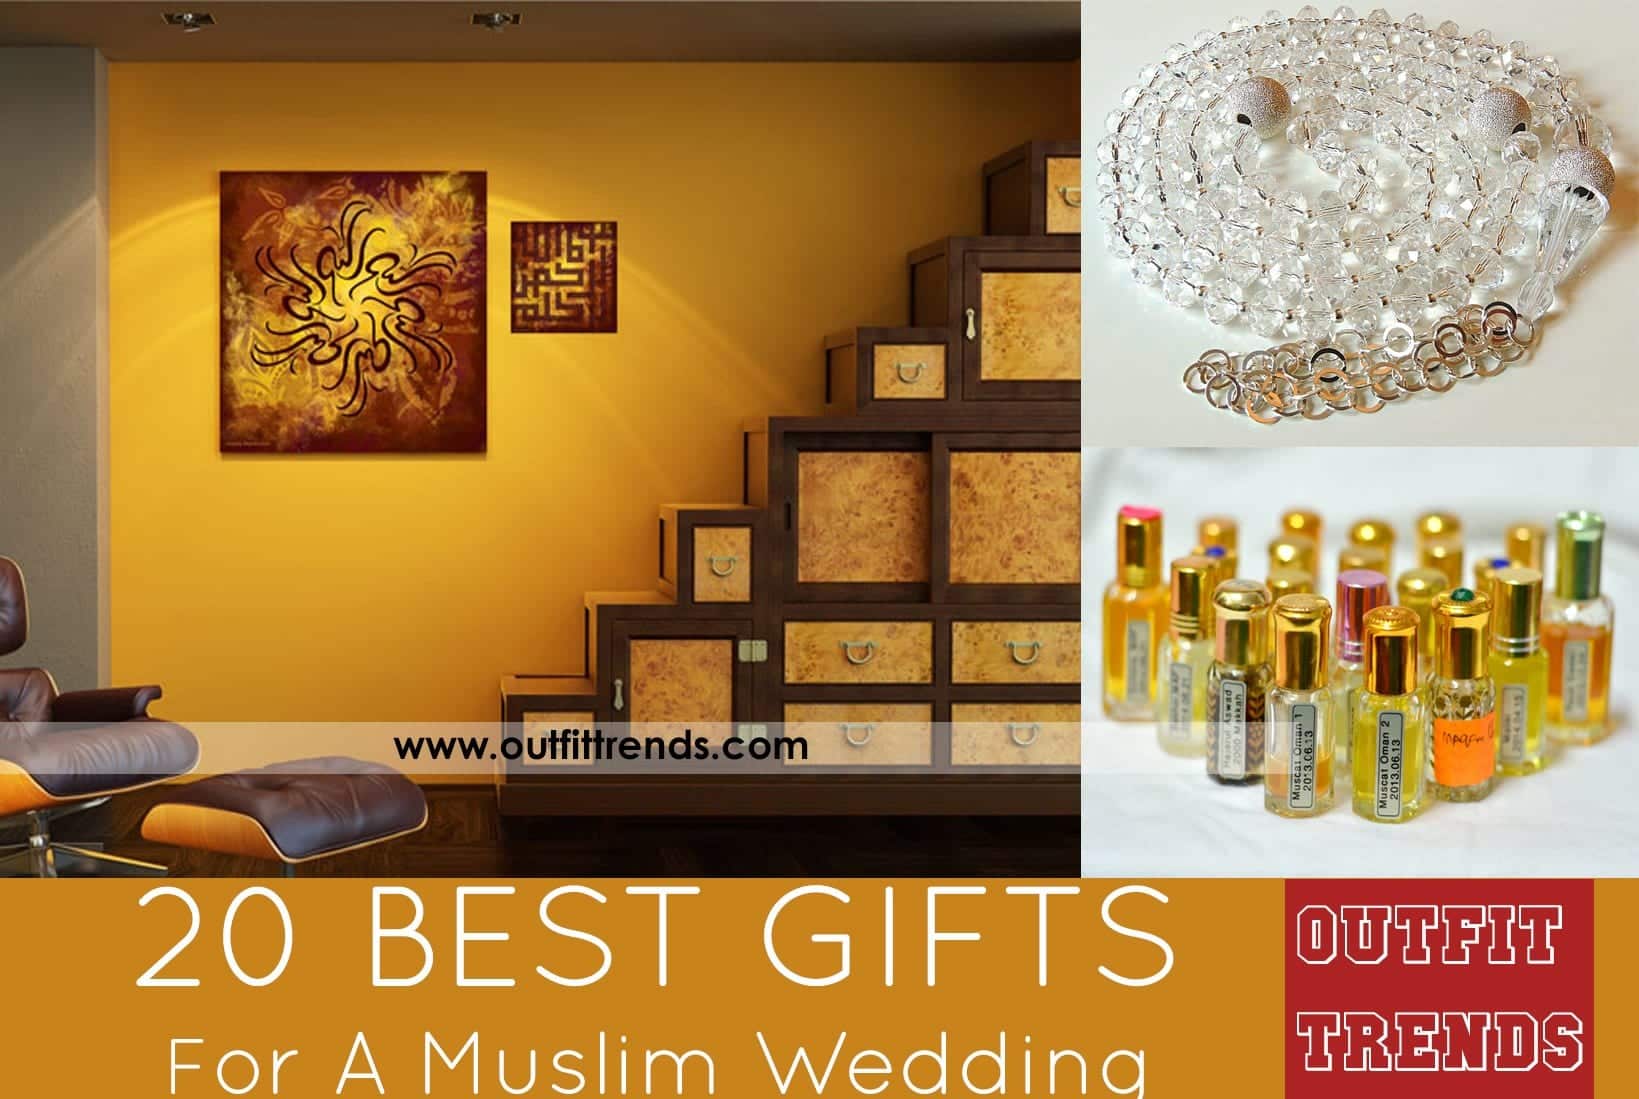 Muslim Wedding Gift Ideas-20 best Gifts for Islamic Weddings